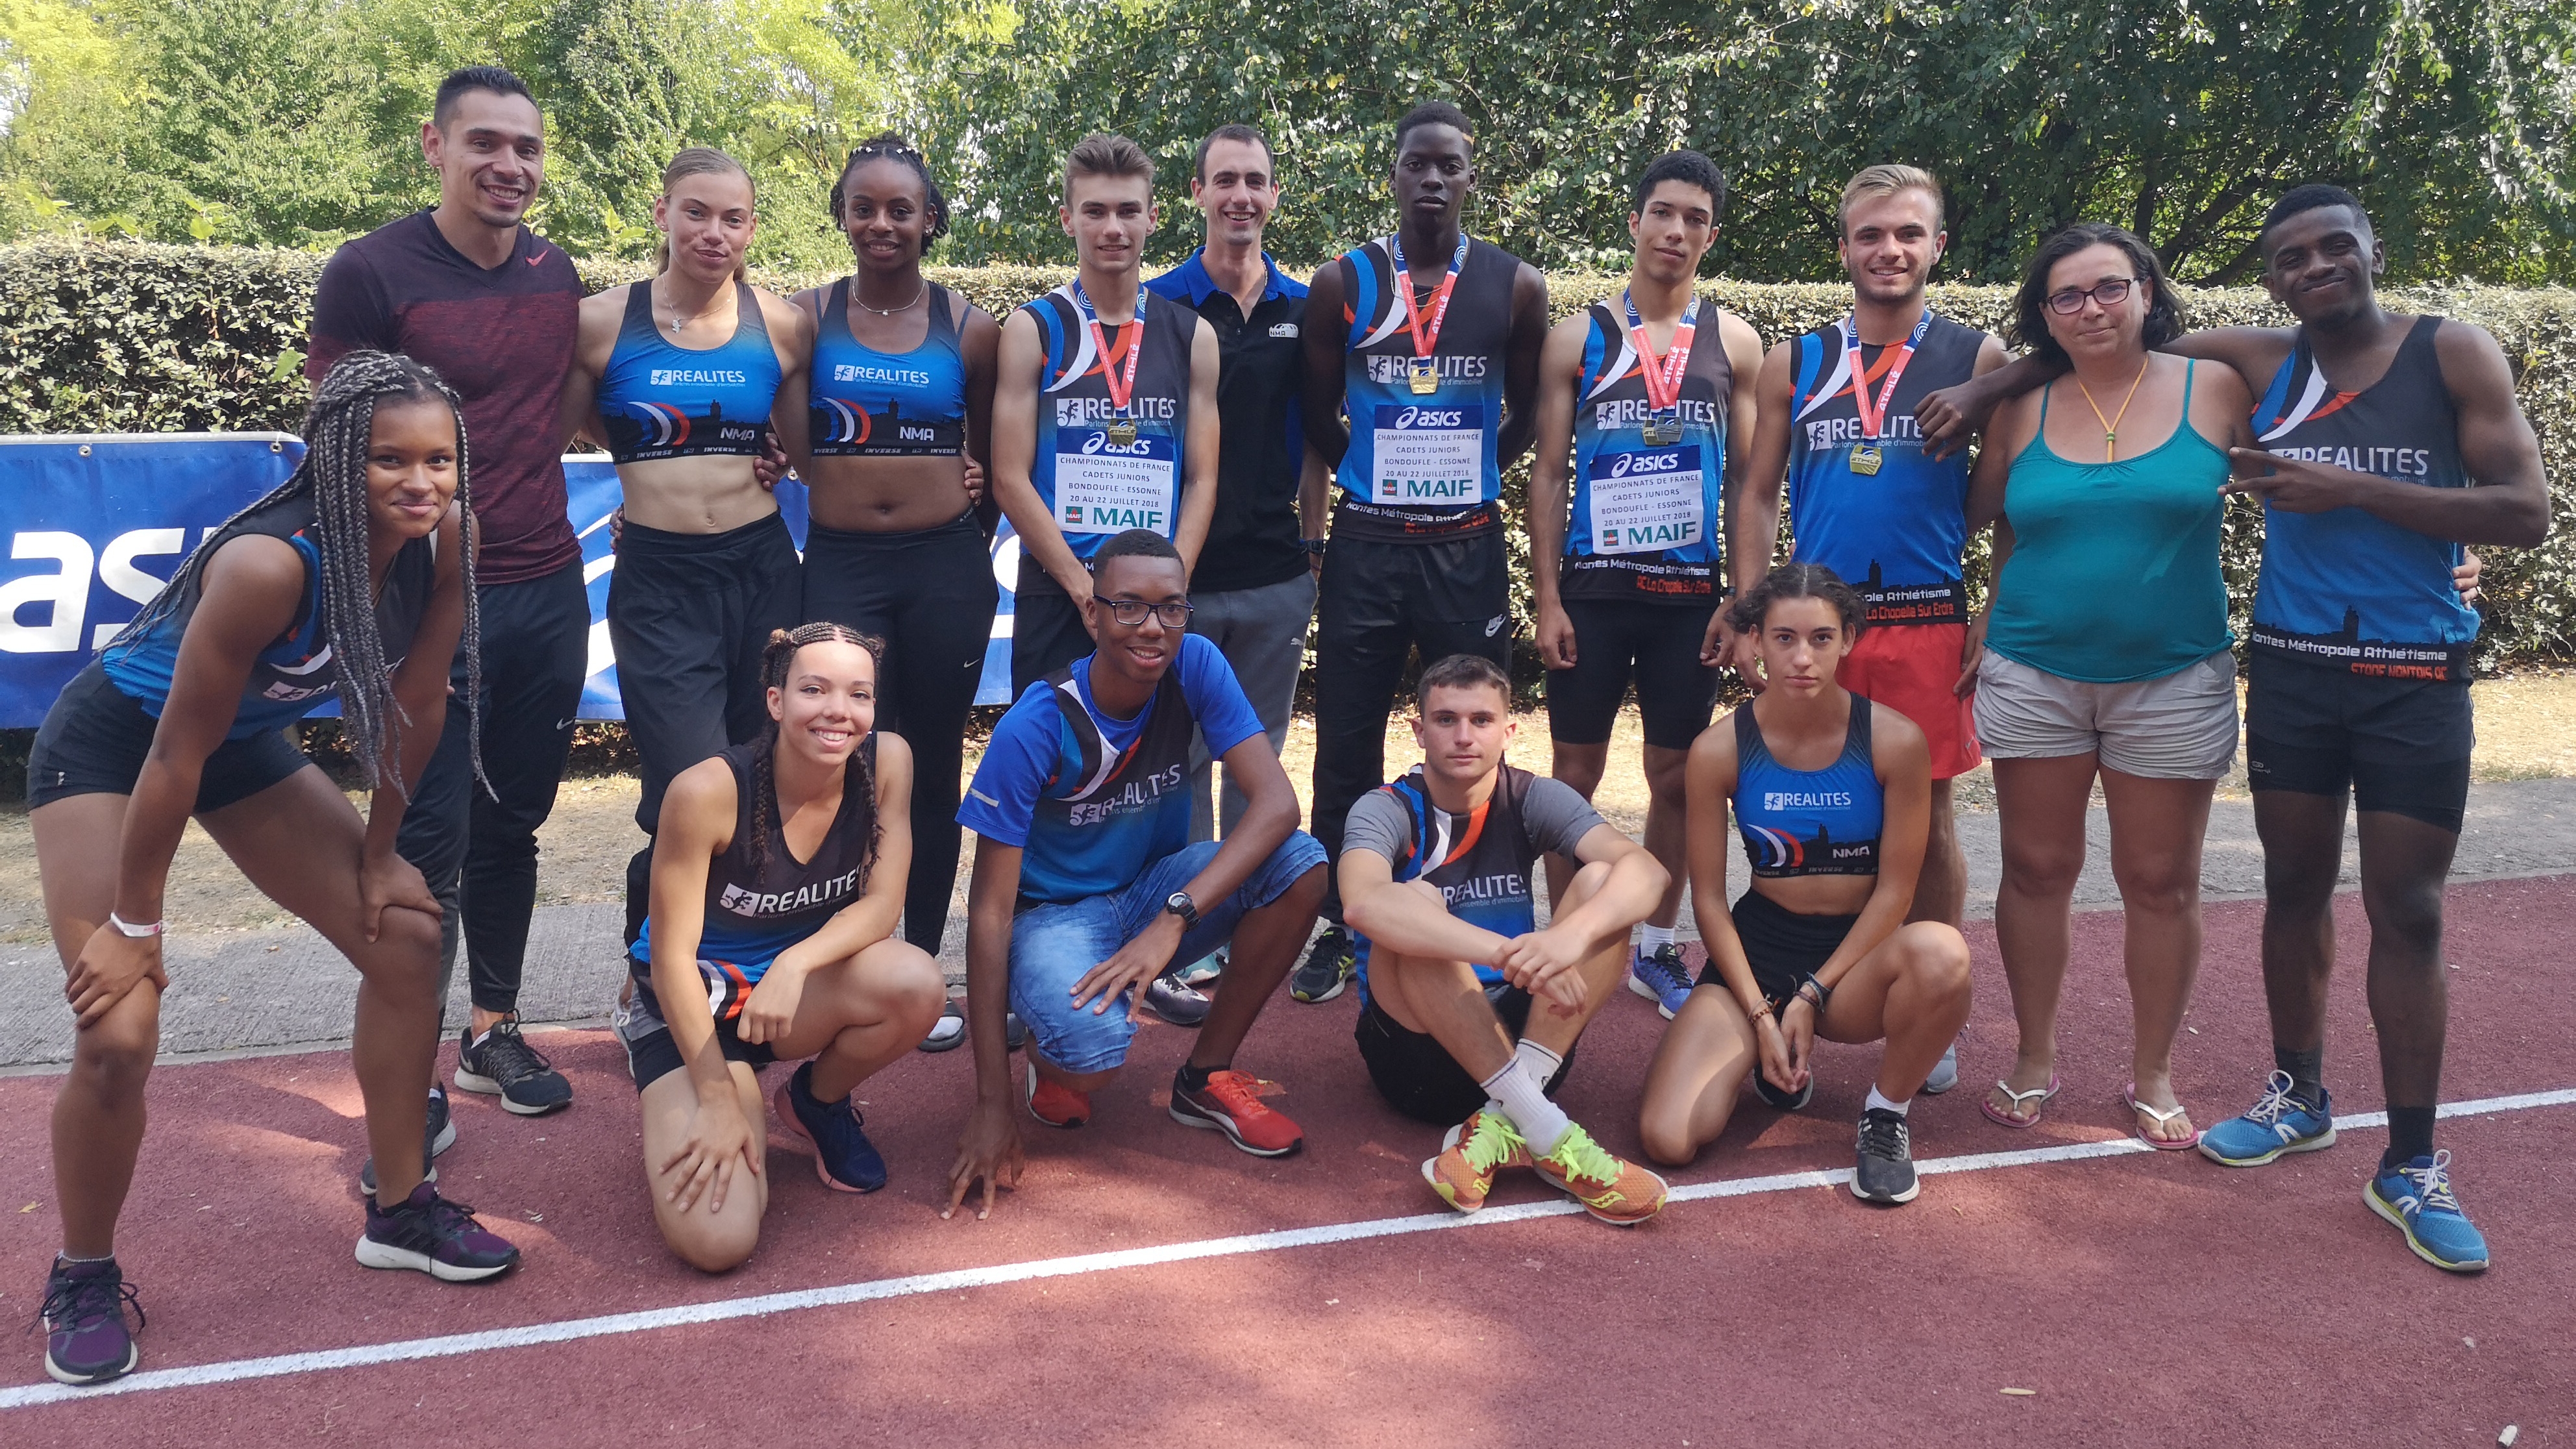 Championnats de France cadets et juniors : Un collectif en or